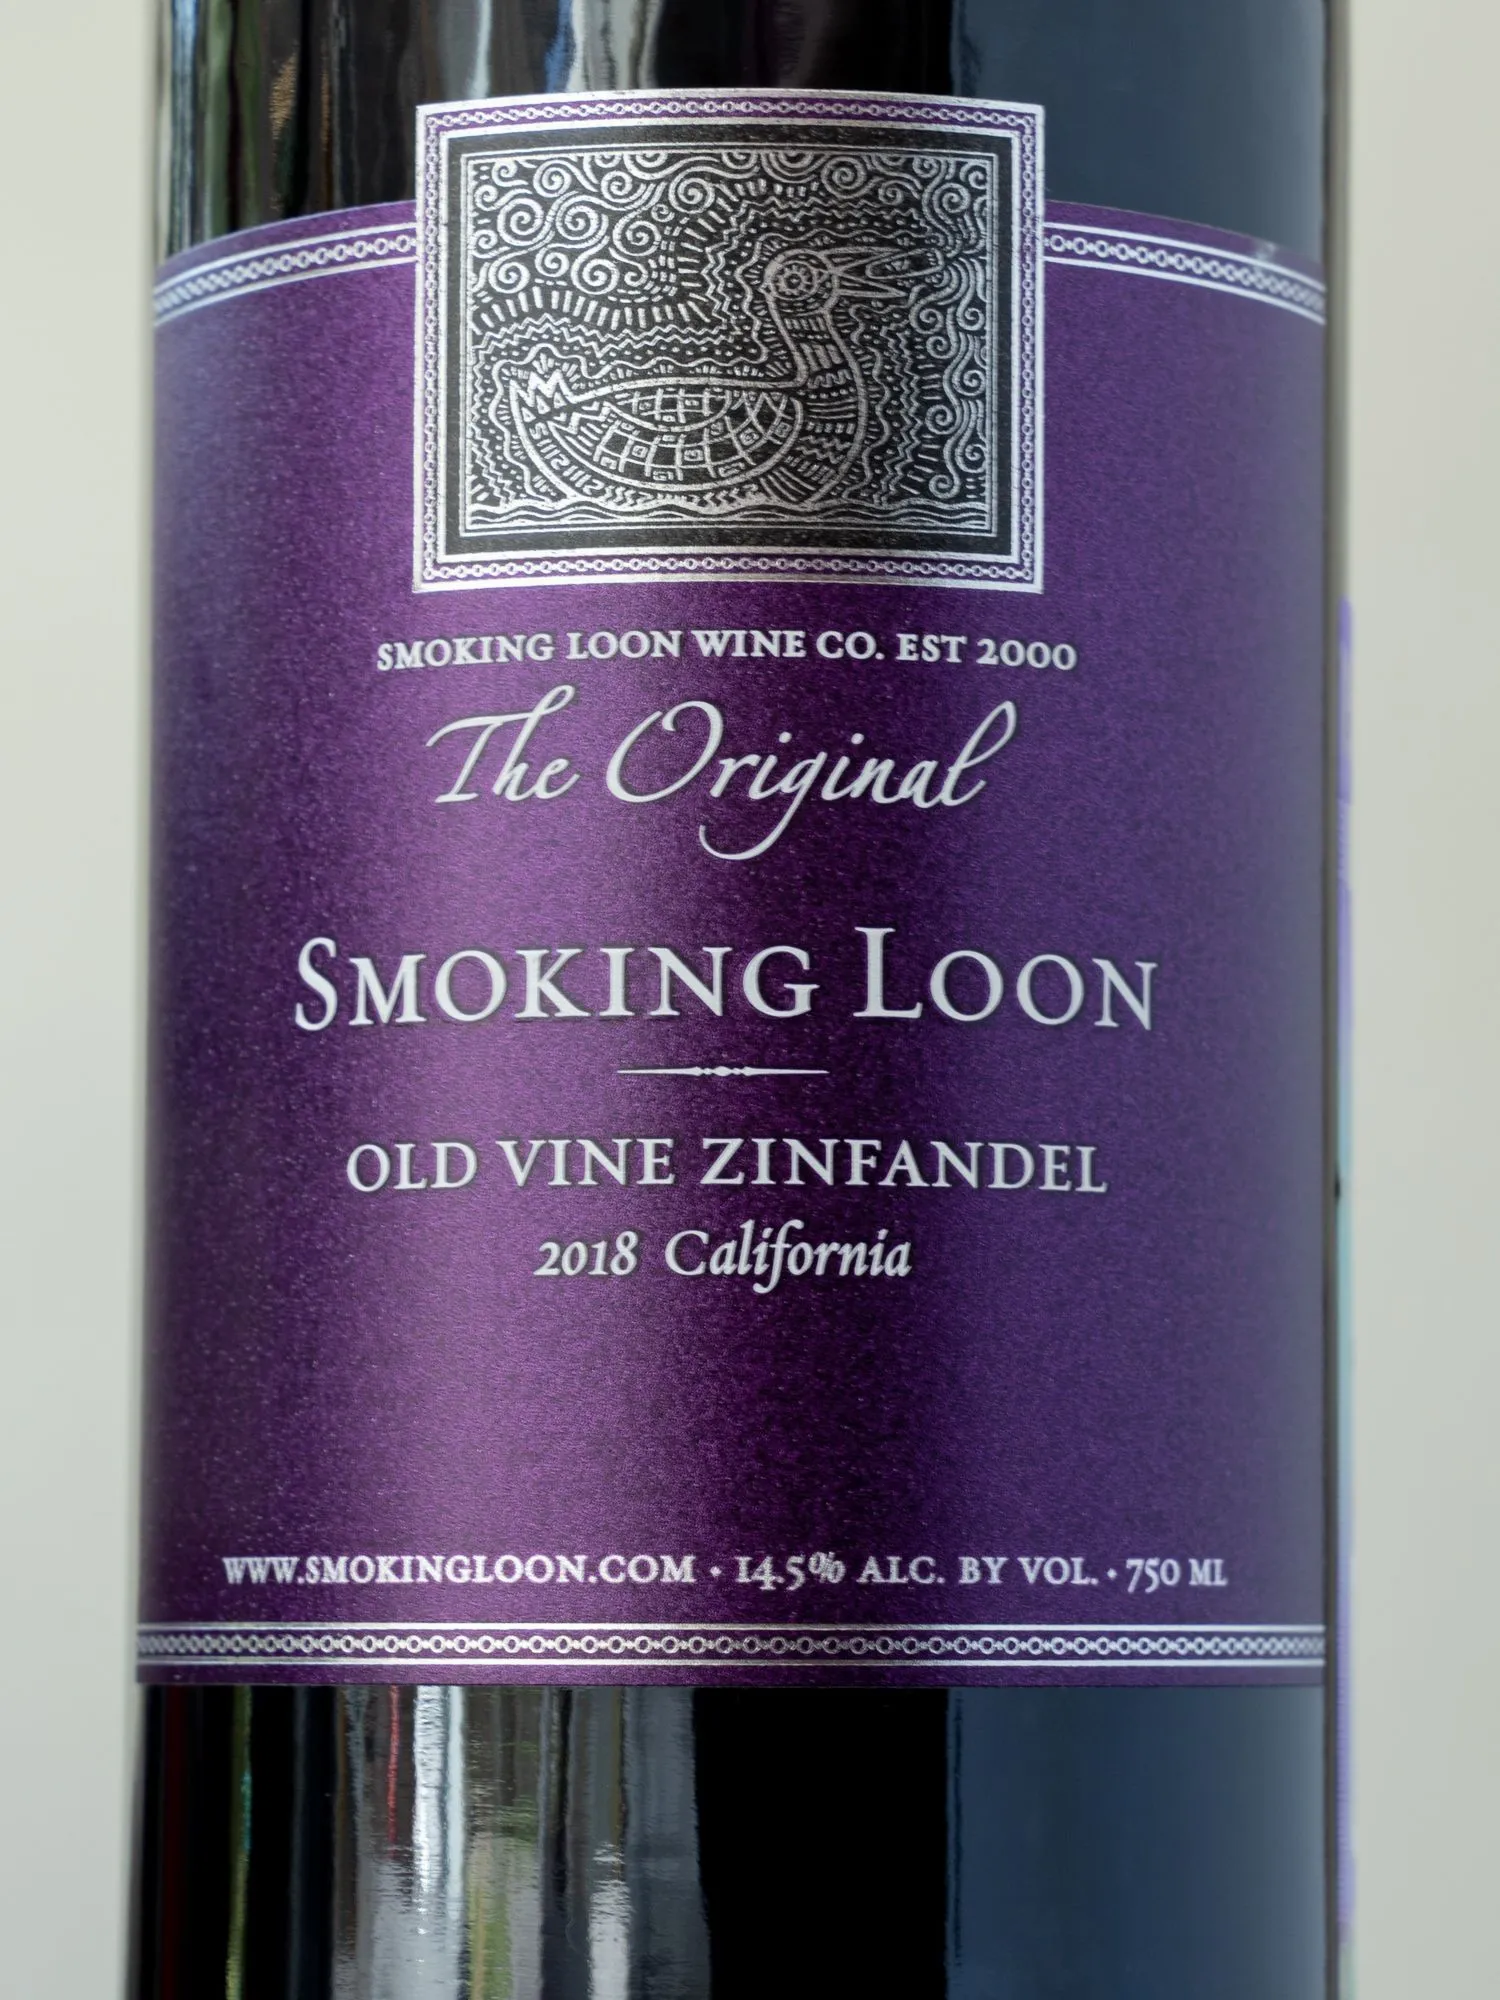 Вино Smoking Loon Original Old Vine Zinfandel / Ориджинал Смоукинг Лун Олд Вайн Зинфандель